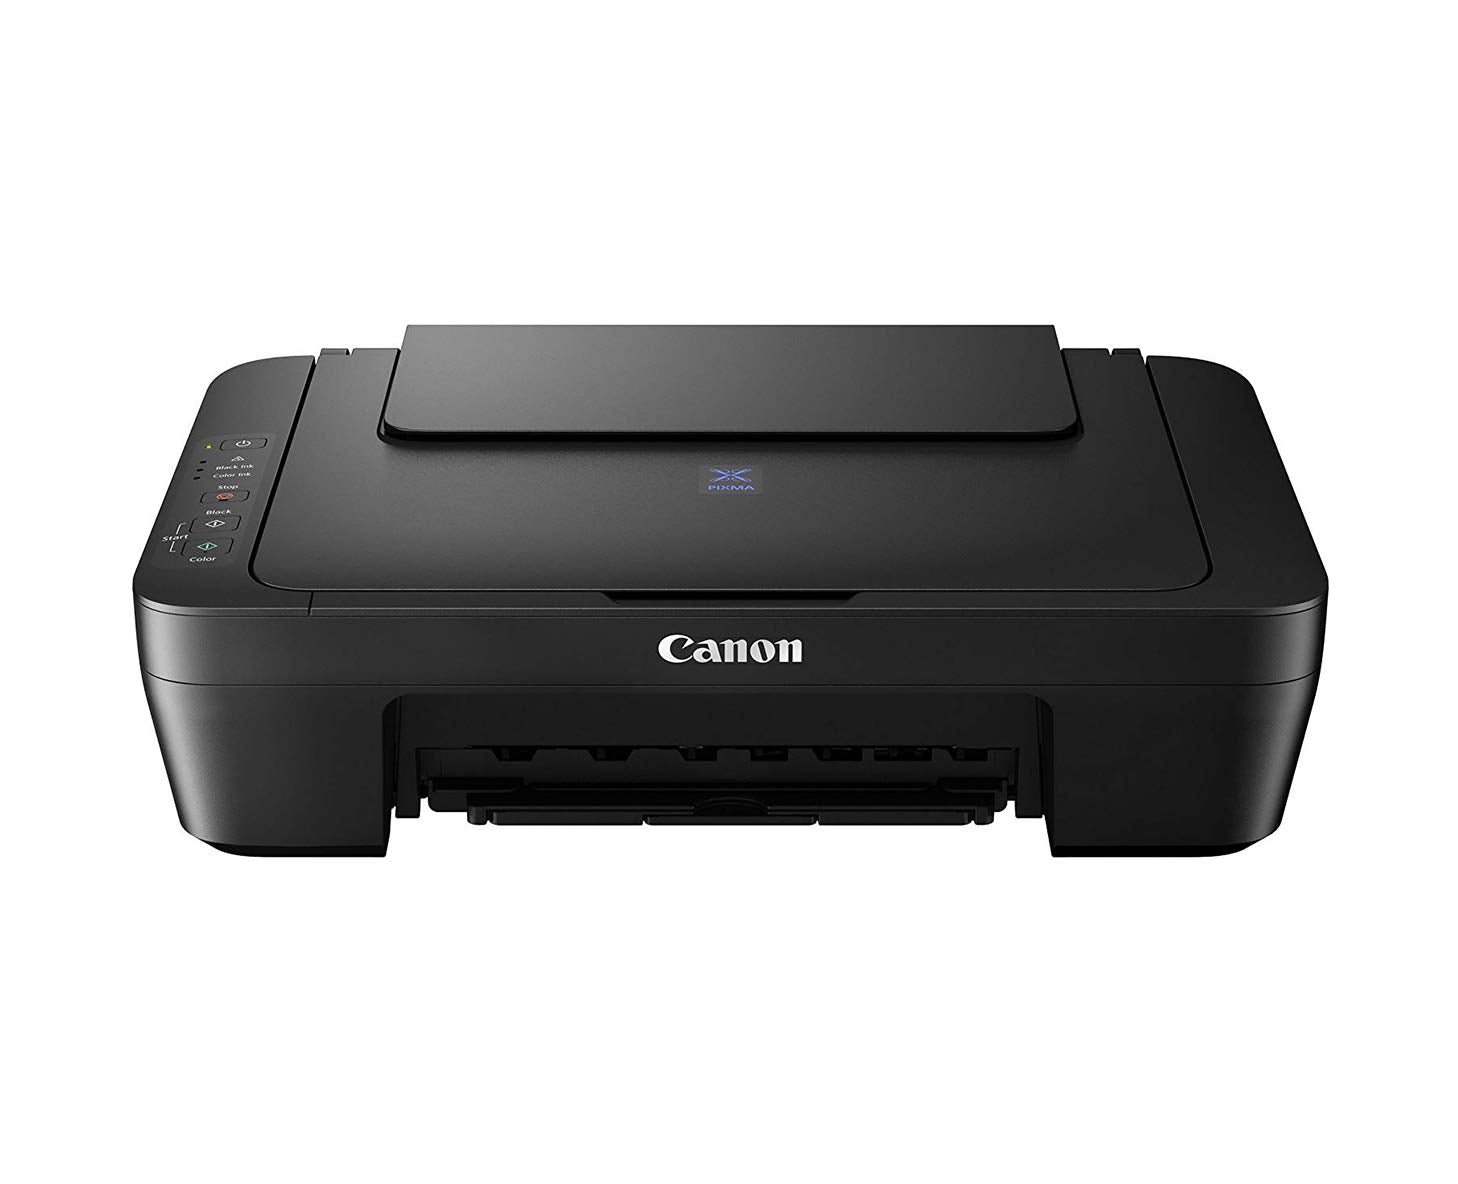 Canon Pixma E410 Inkjet Printer